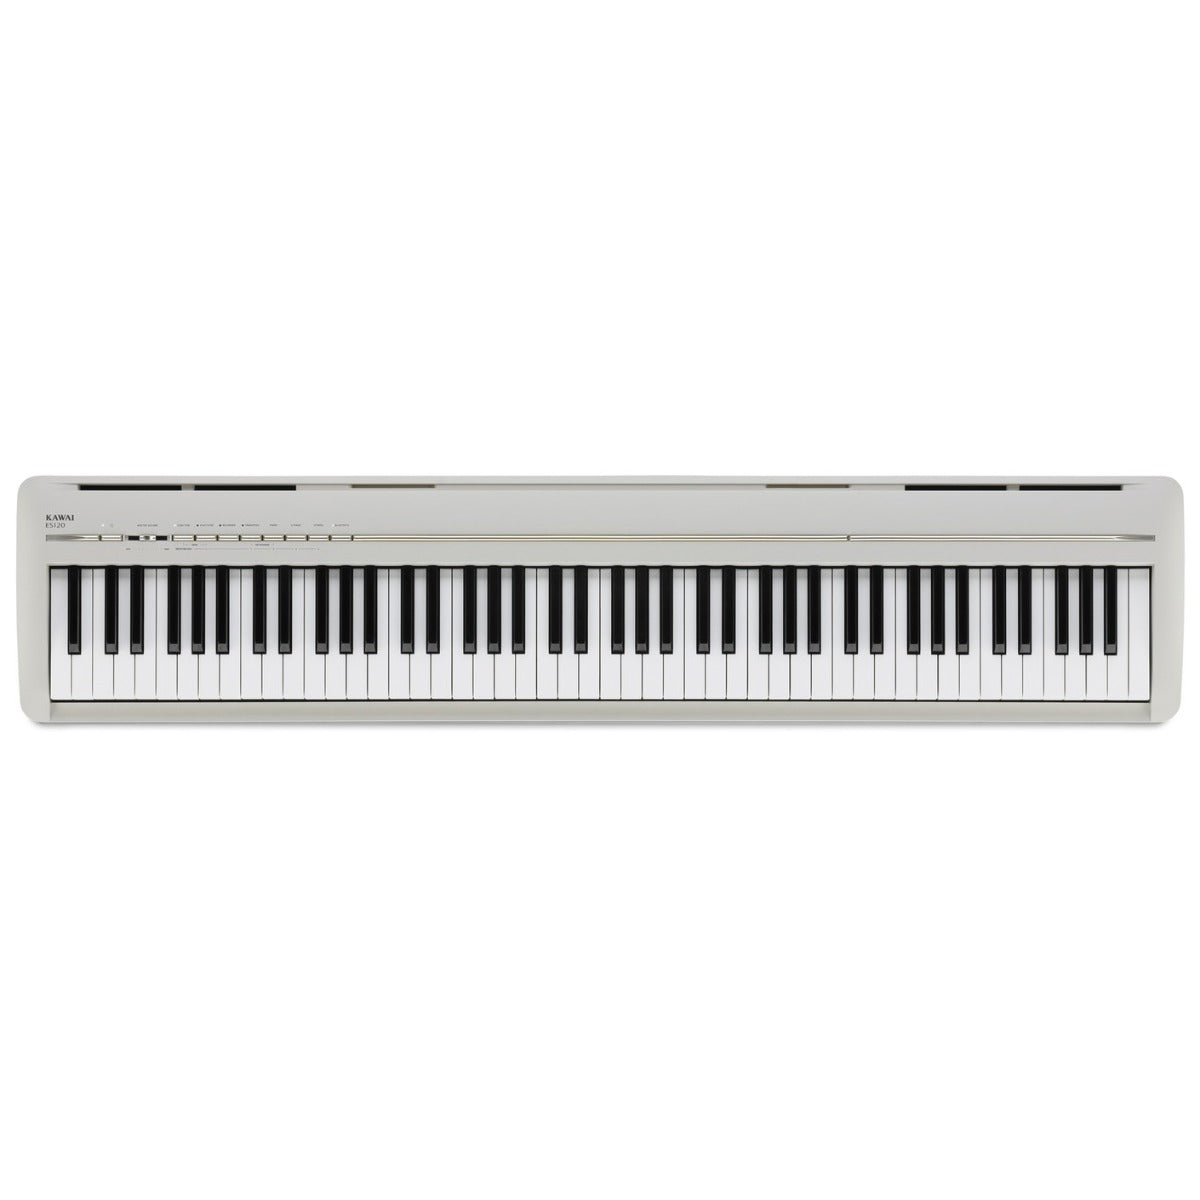 Kawai ES120 Portable Digital Piano - Light Grey, Top view